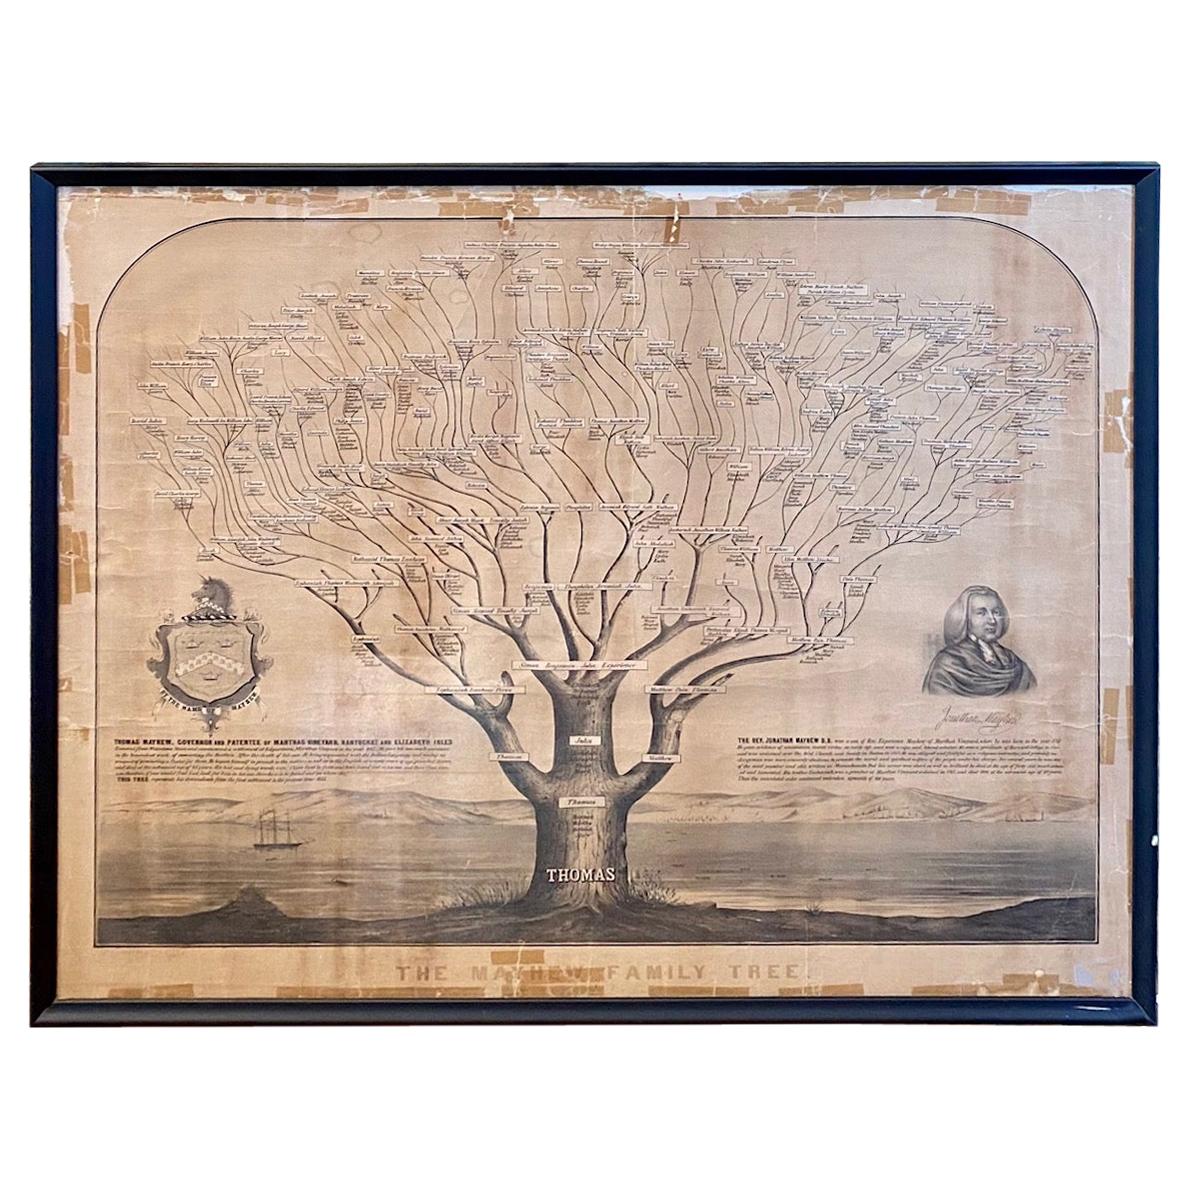 19th Century Mayhew Family Tree from Nantucket and Martha's Vineyard from 1855